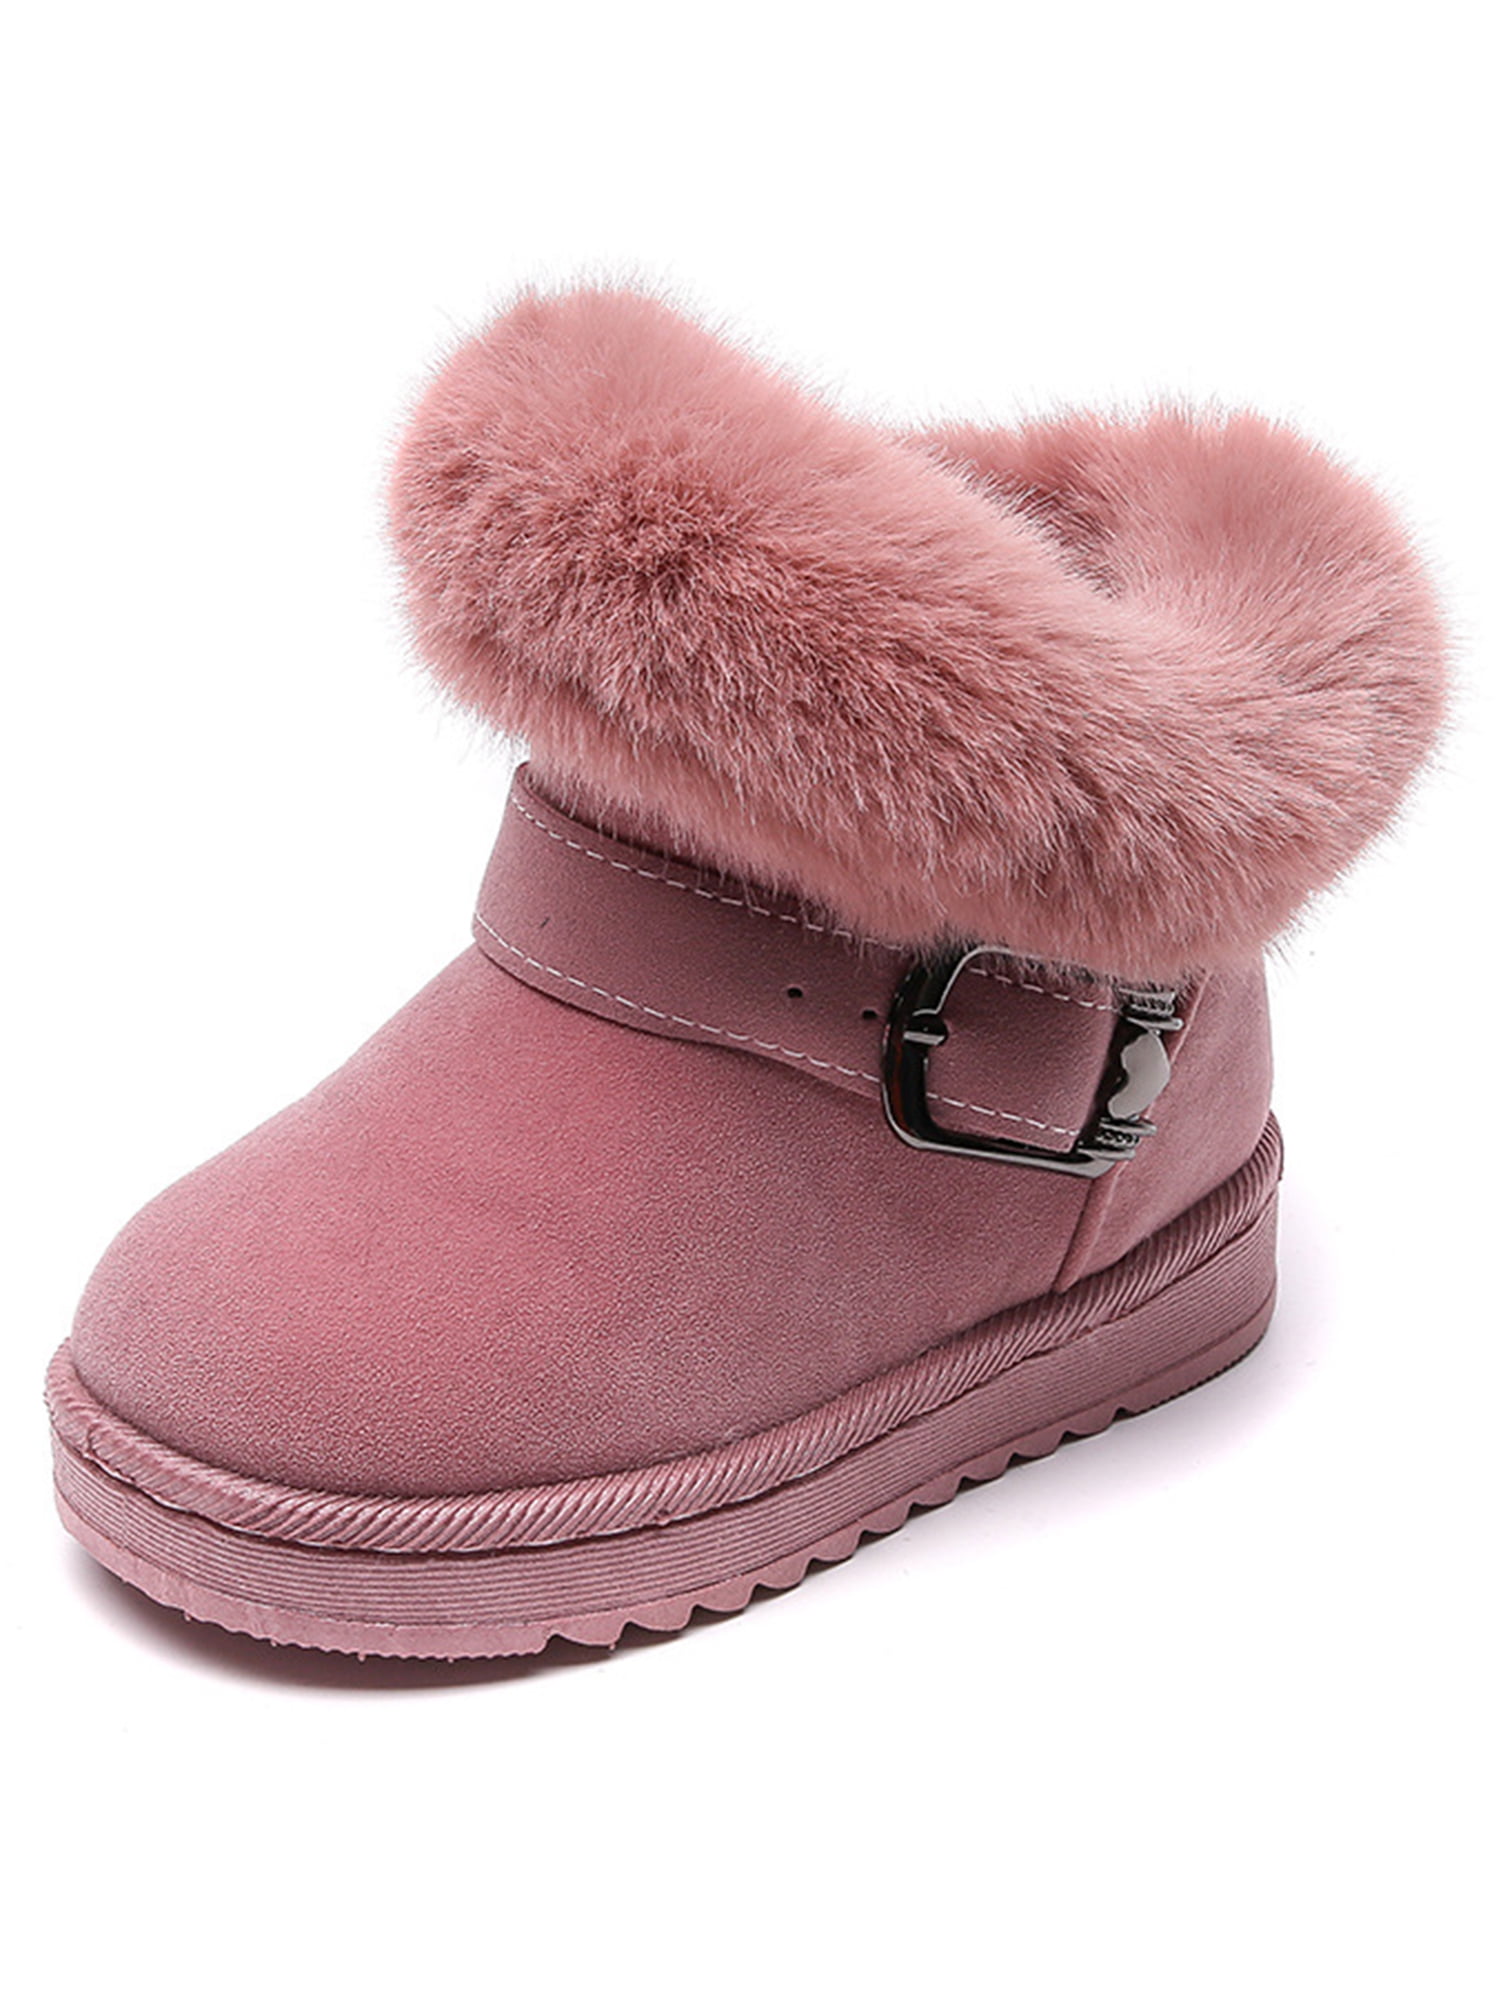 Bezwaar puberteit cocaïne Zodanni Toddler Boots for Girls Kids Non-Slip Warm Lined Snow Boot School  Winter Boots Casual Ankle Booties Pink-2 11C - Walmart.com